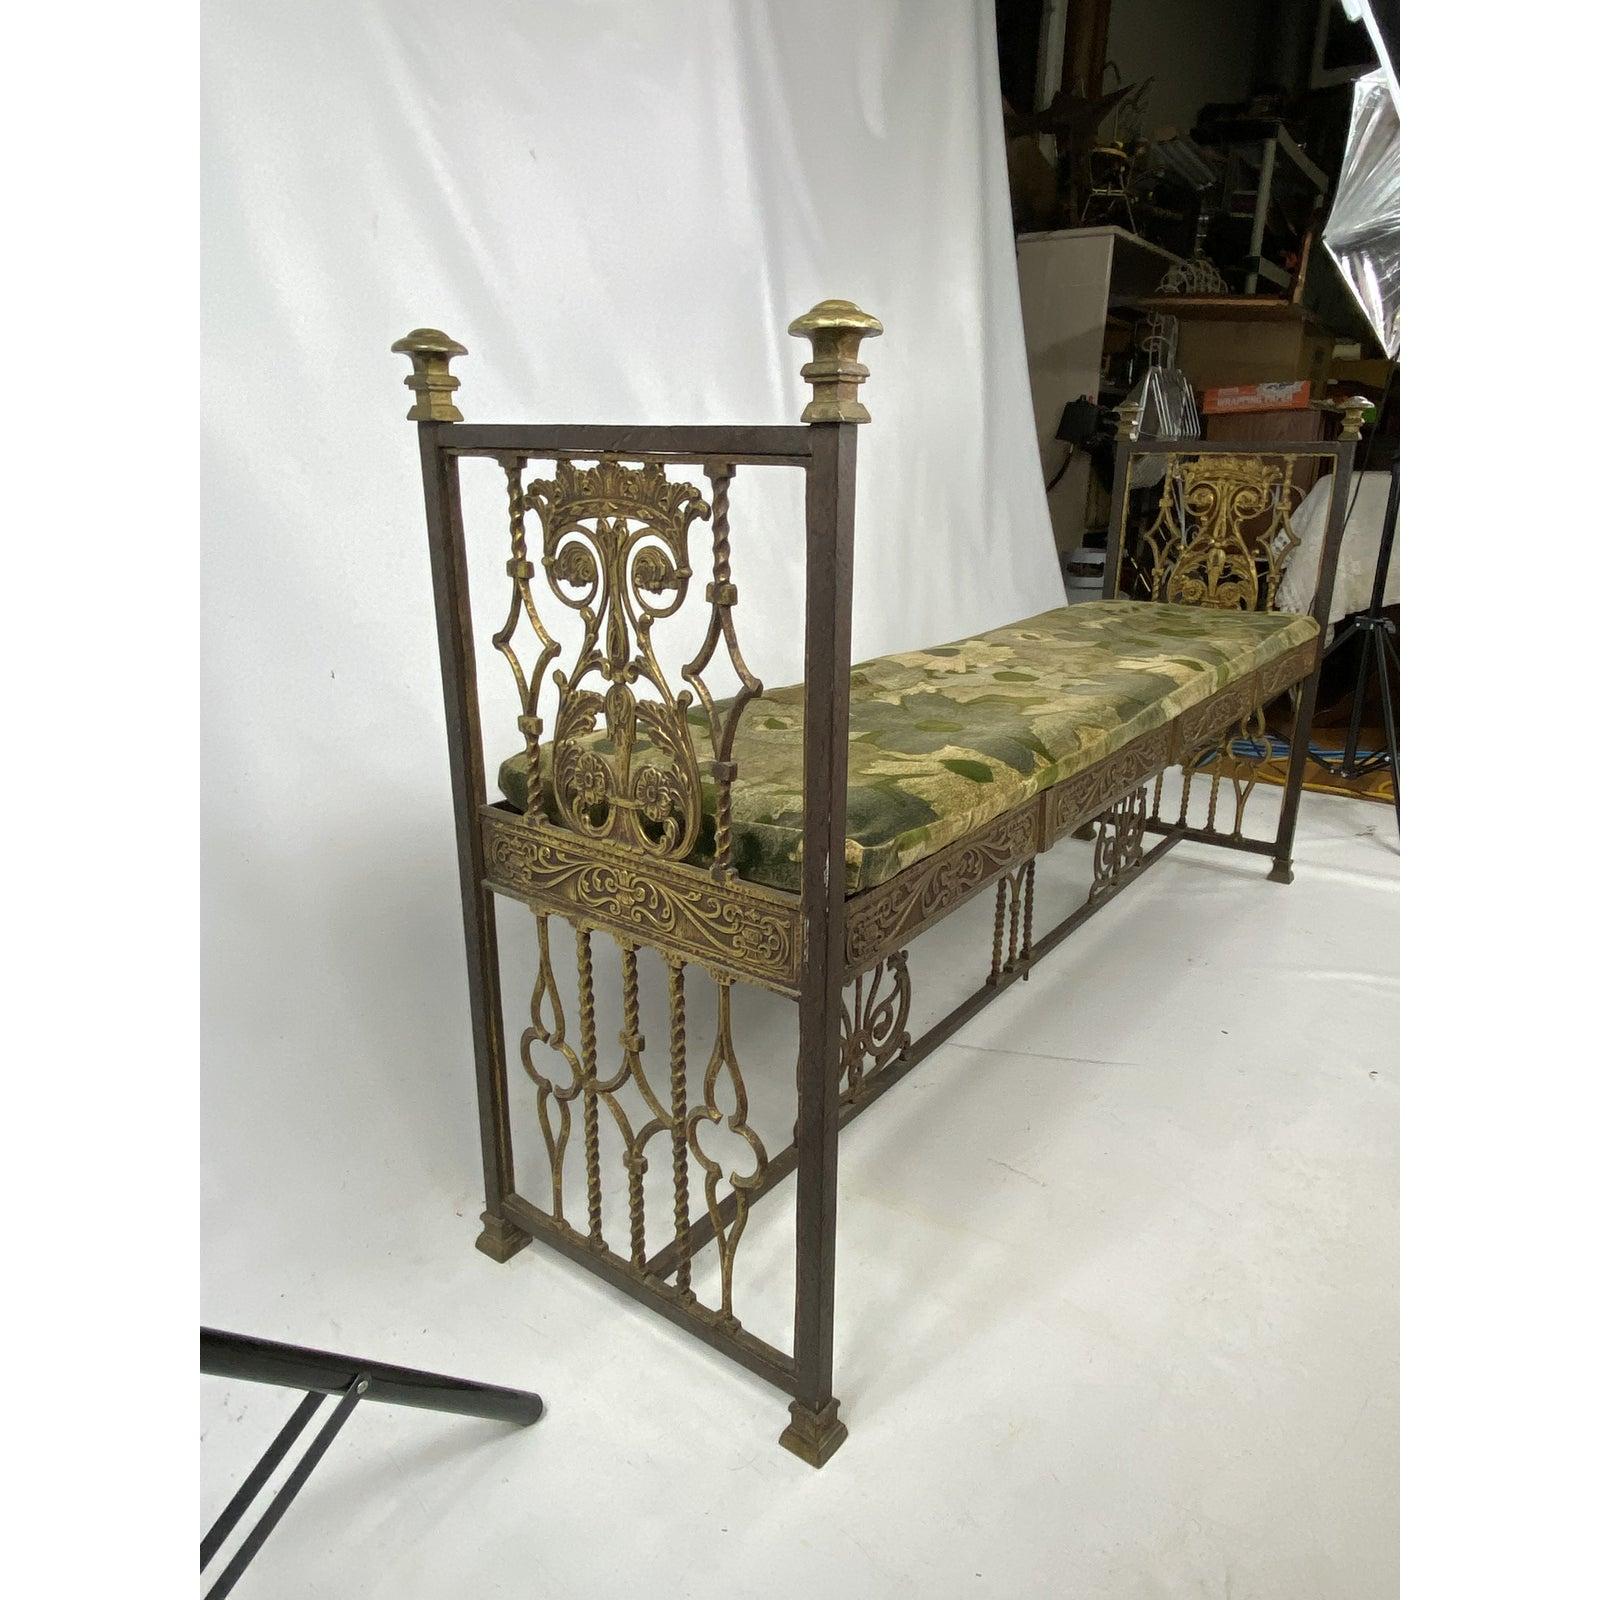 Vintage gold gilt ornate iron renaissance style bench.